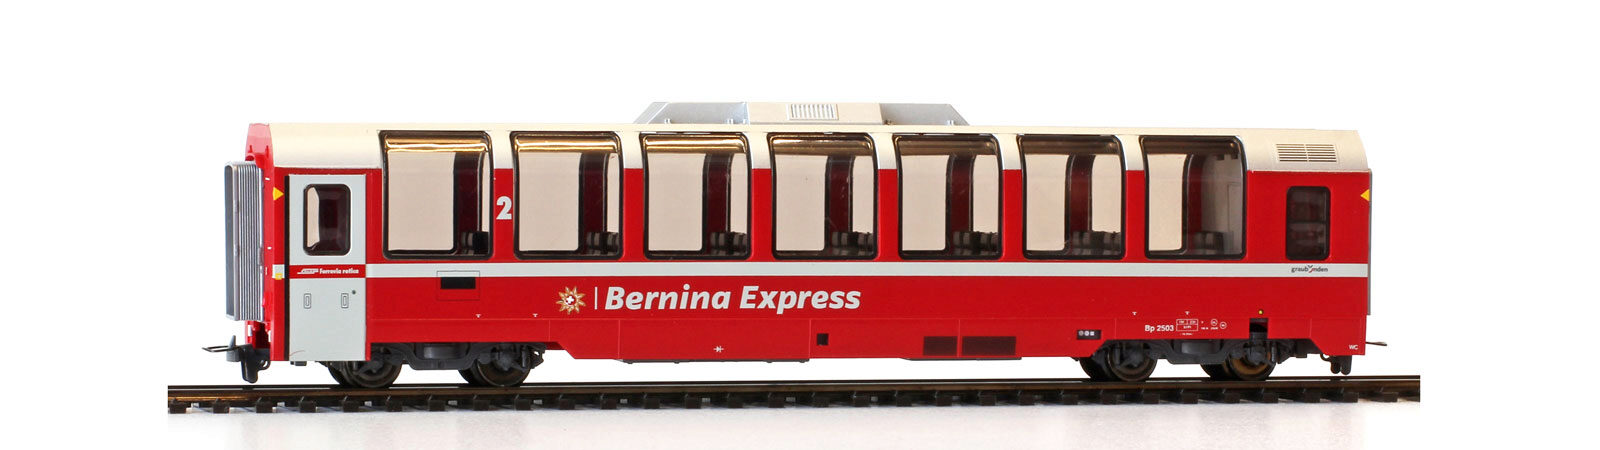 Bemo 3294143 RhB Bp 2503 Panoramawagen Bernina-Express